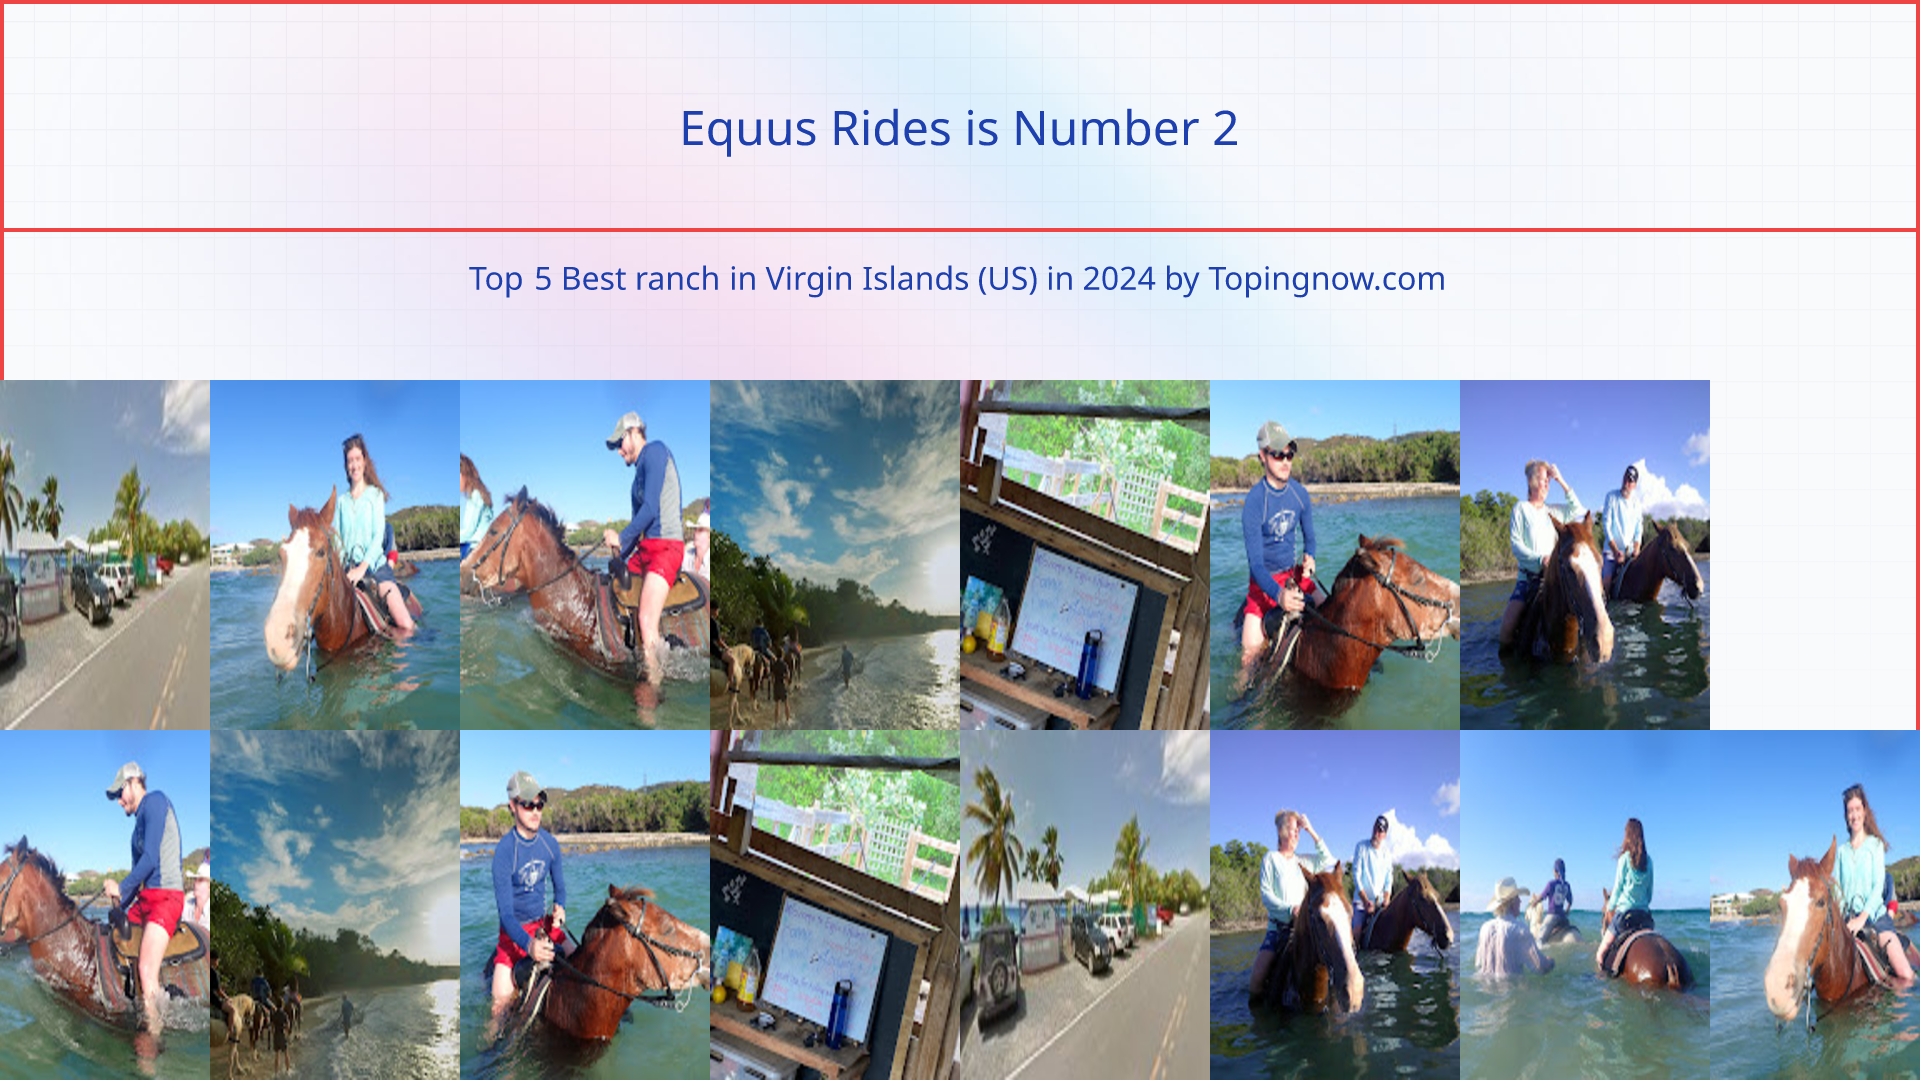 Equus Rides: Top 5 Best ranch in Virgin Islands (US) in 2024